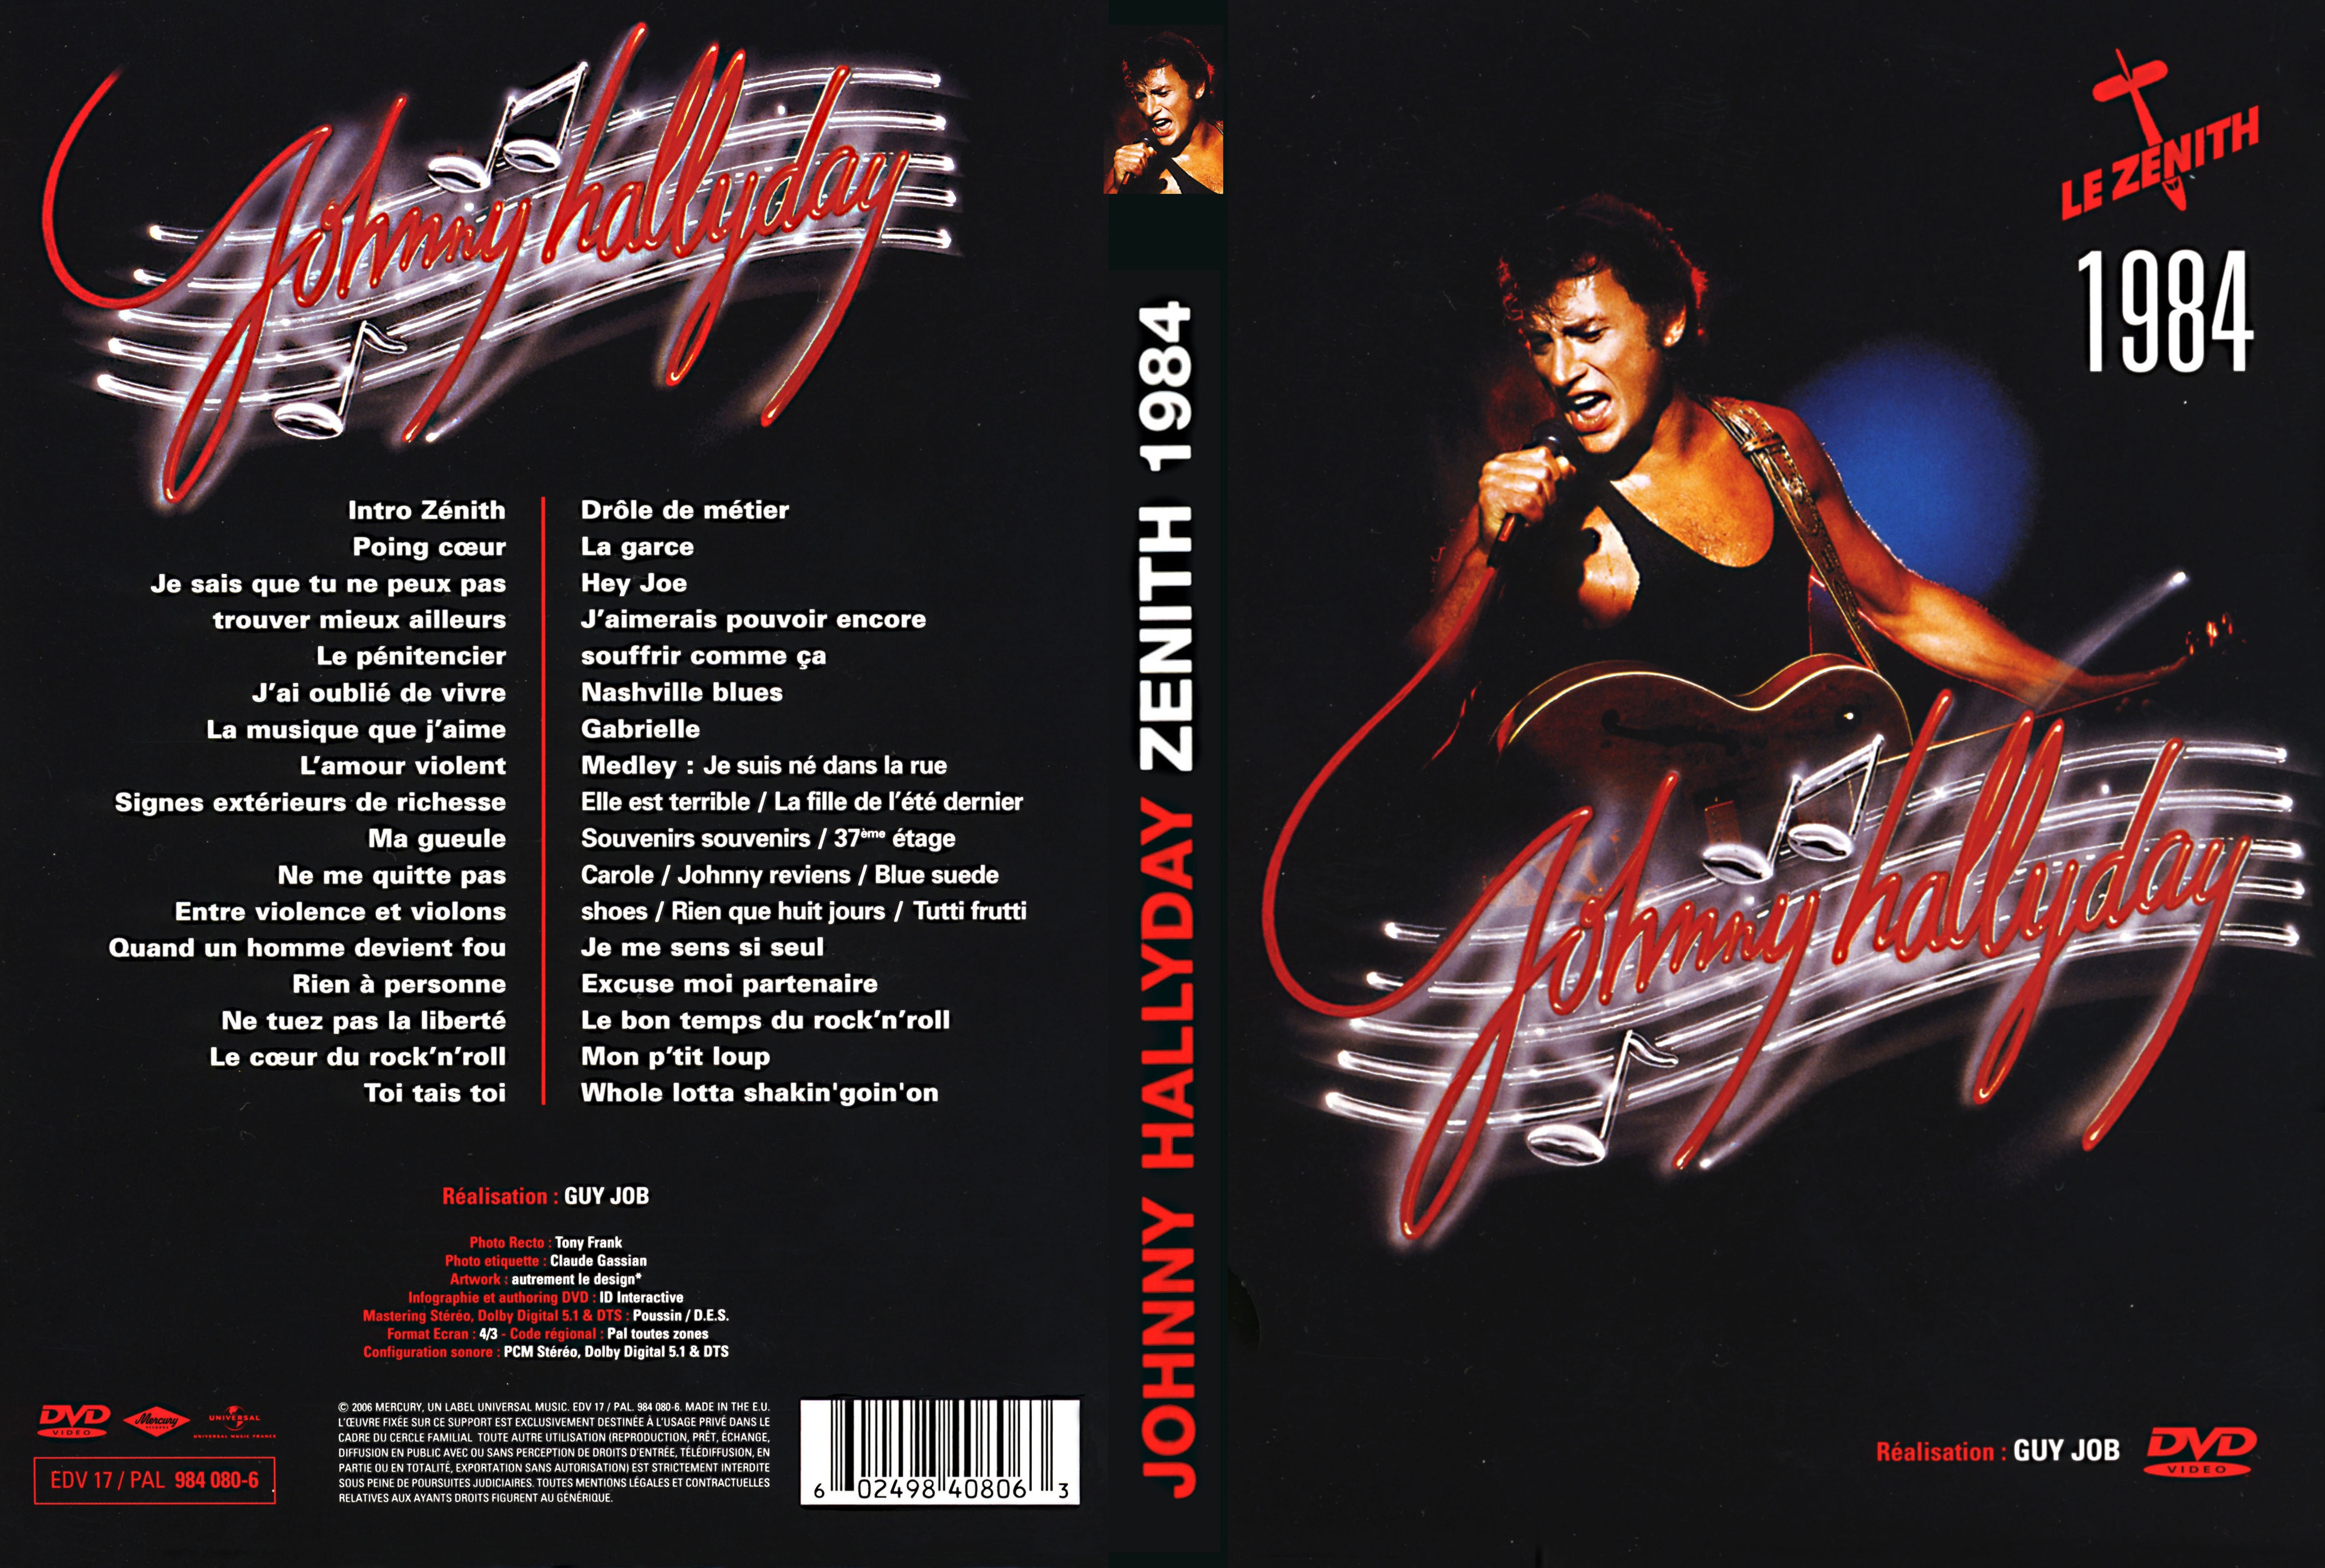 Jaquette DVD Johnny Hallyday Zenith 1984